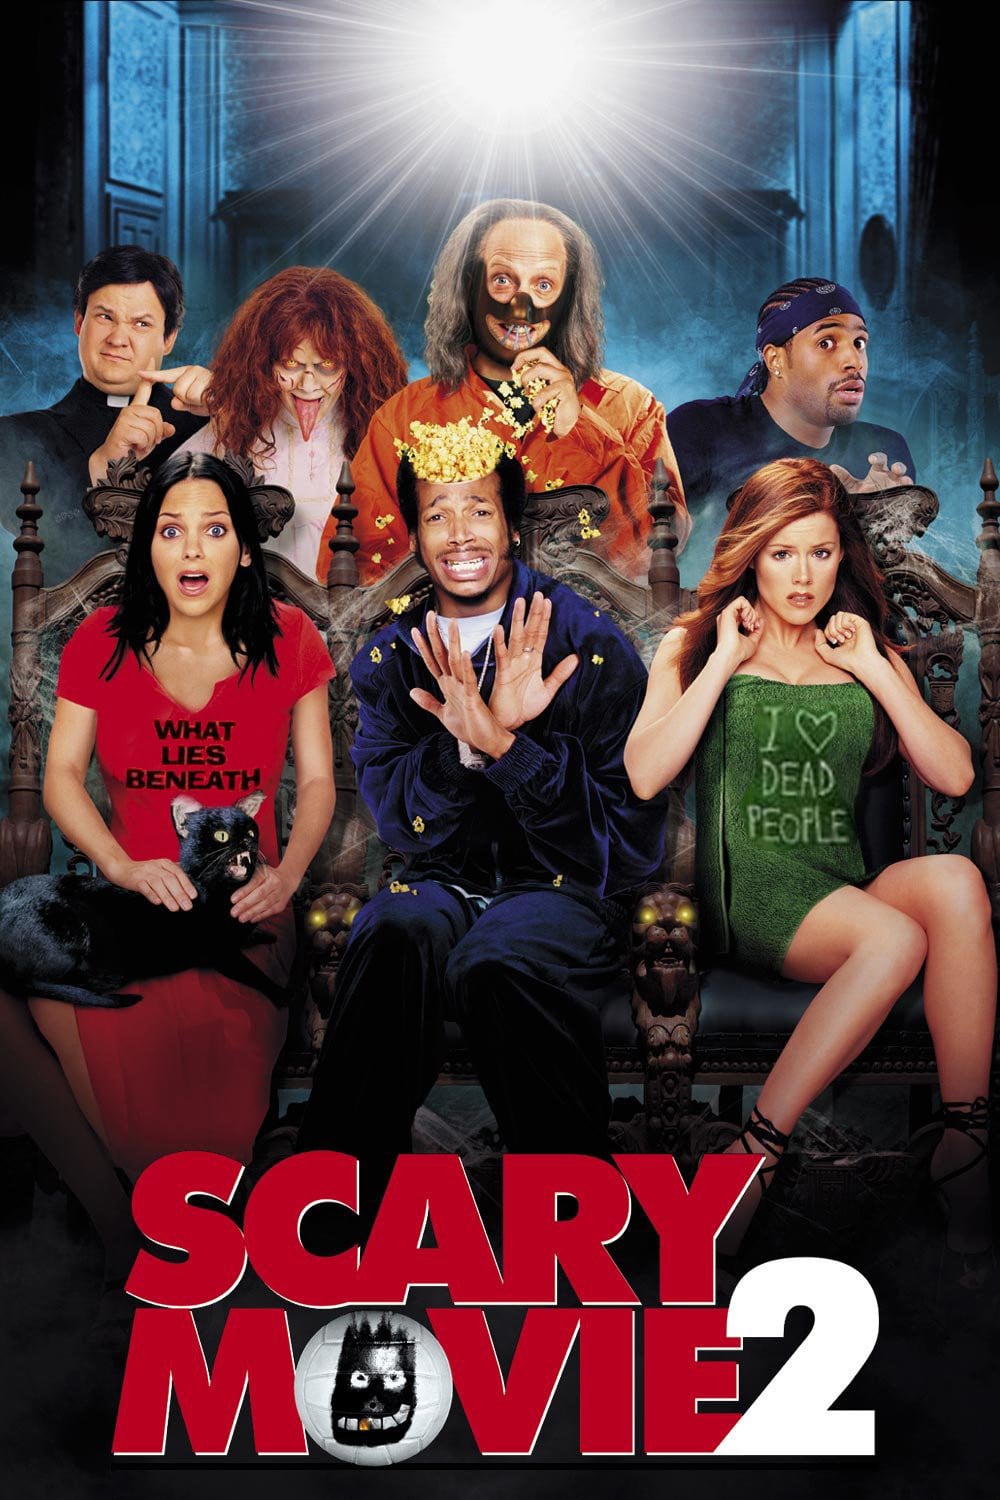 Affiche du film "Scary Movie 2"